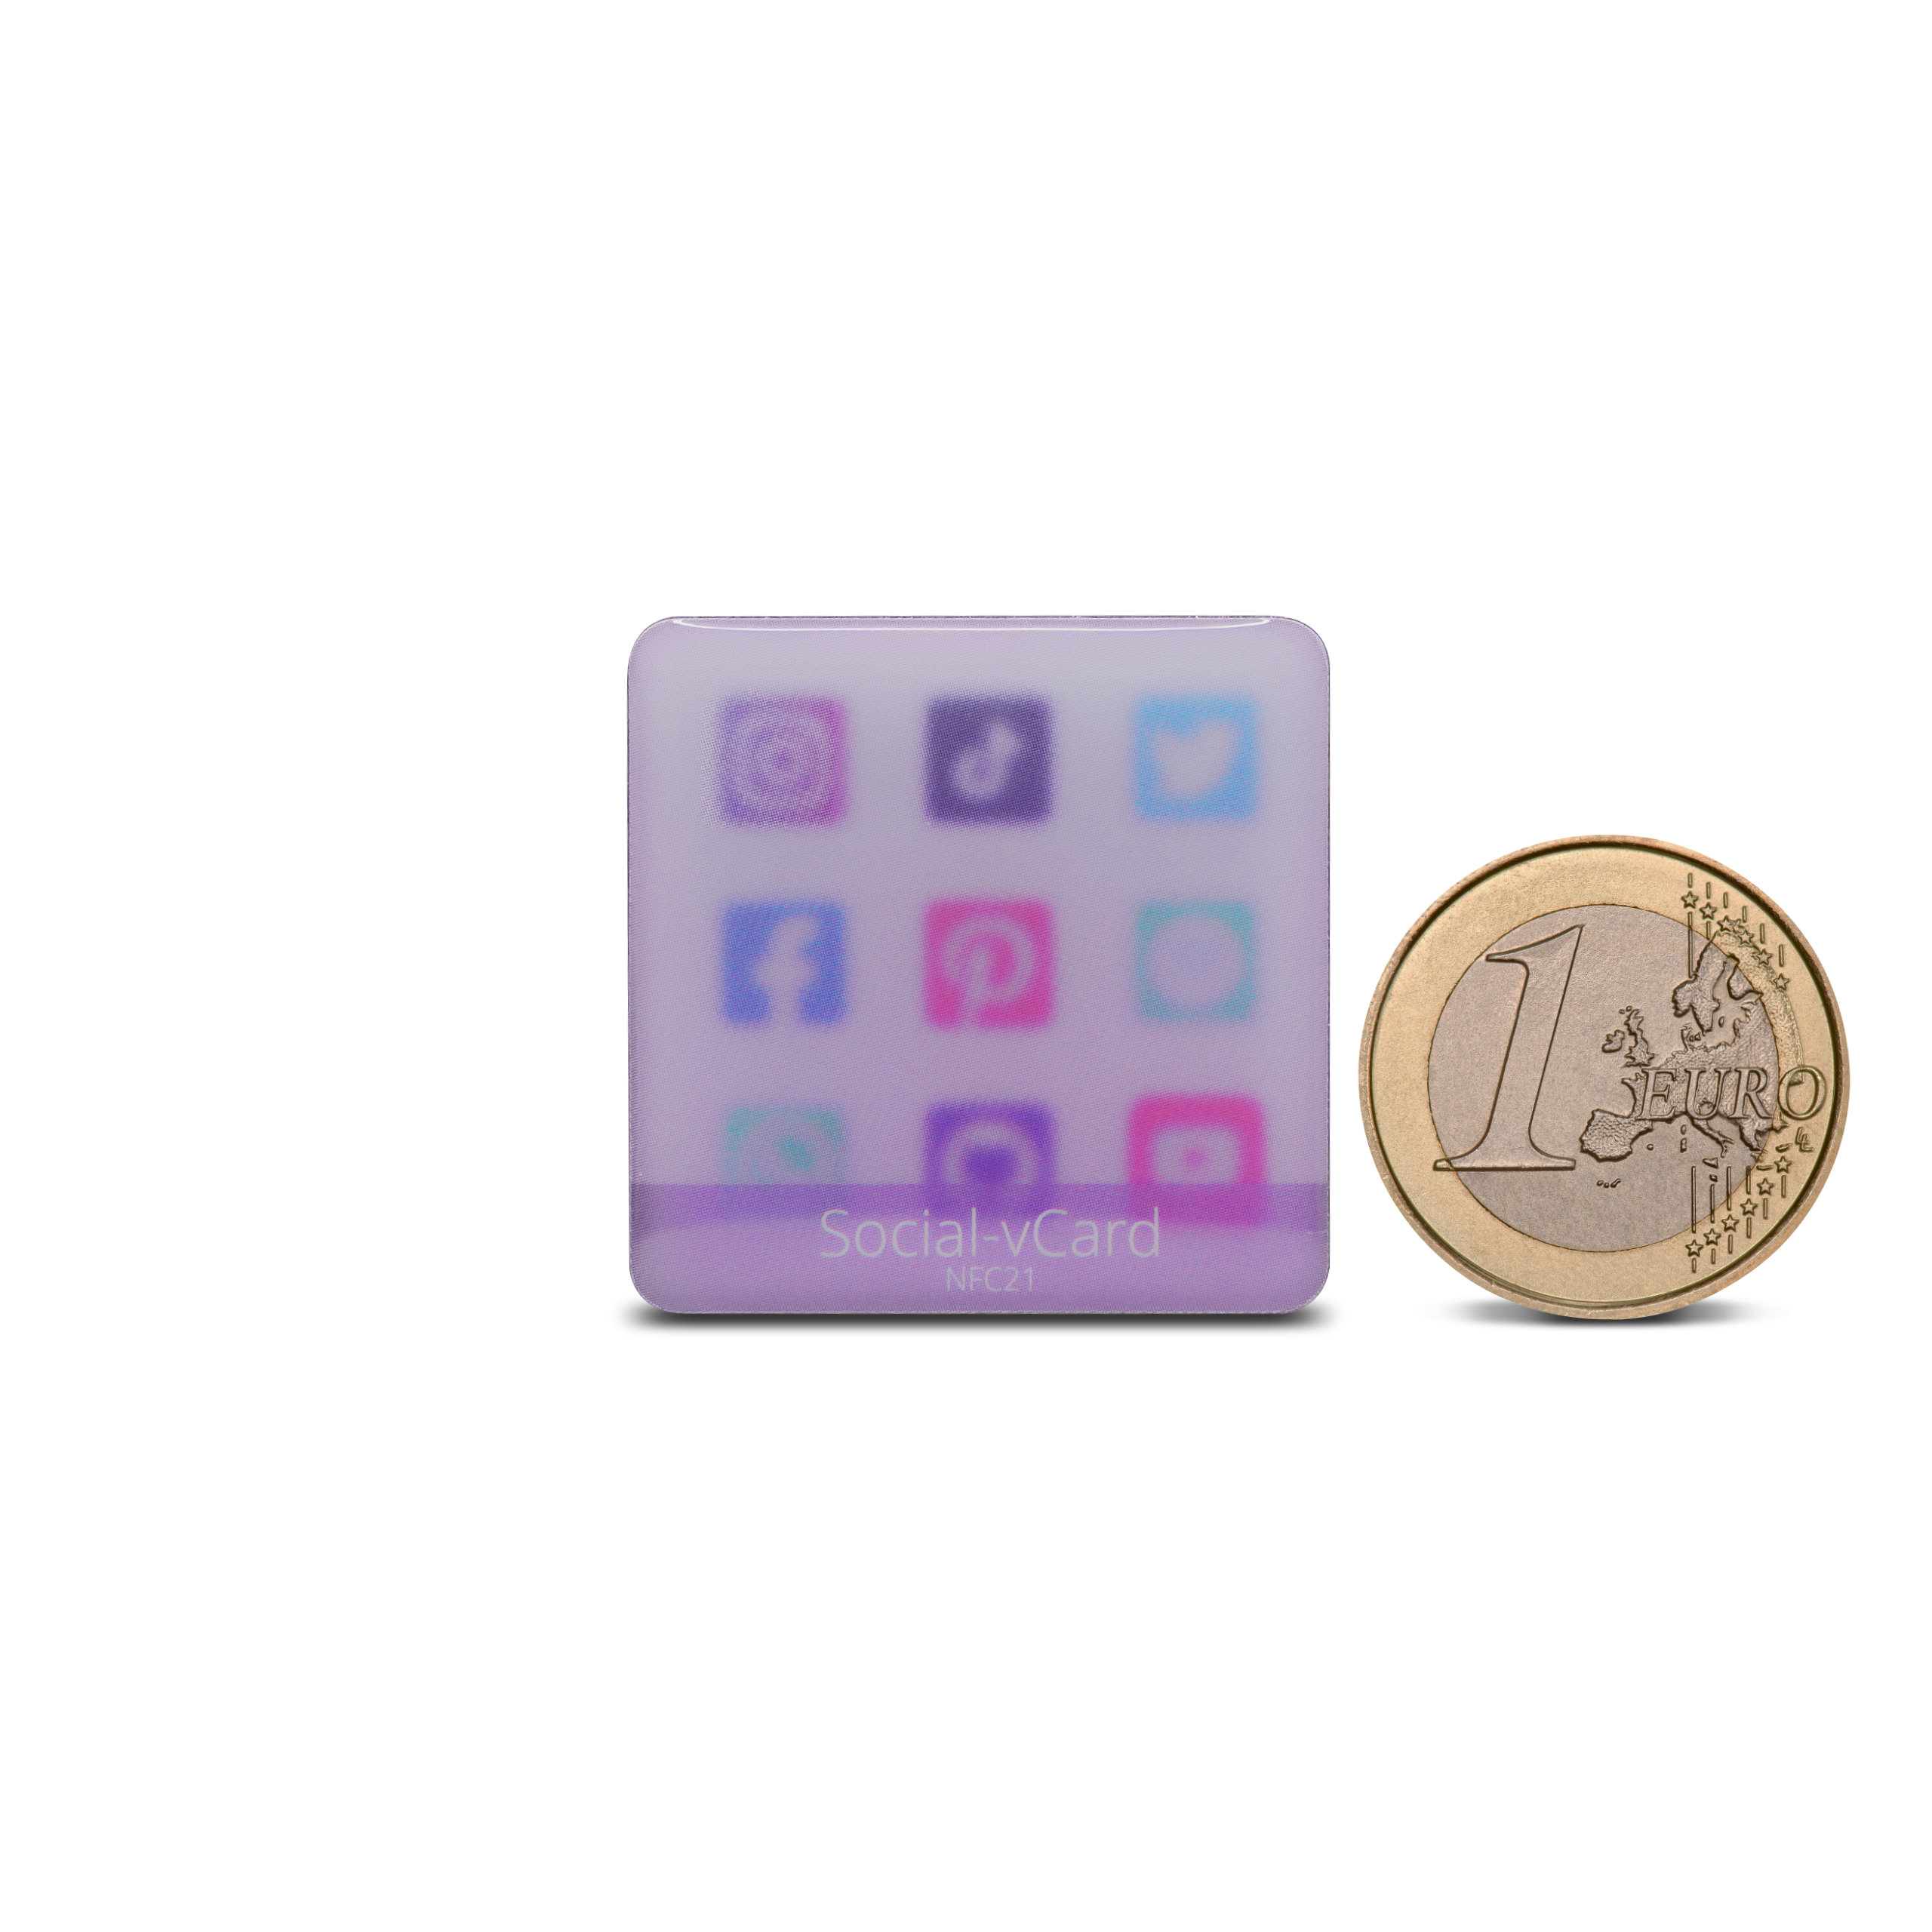 Social-vCard Glow - Digitaler Social Media Sticker - PET  - 35 x 35 mm - pink